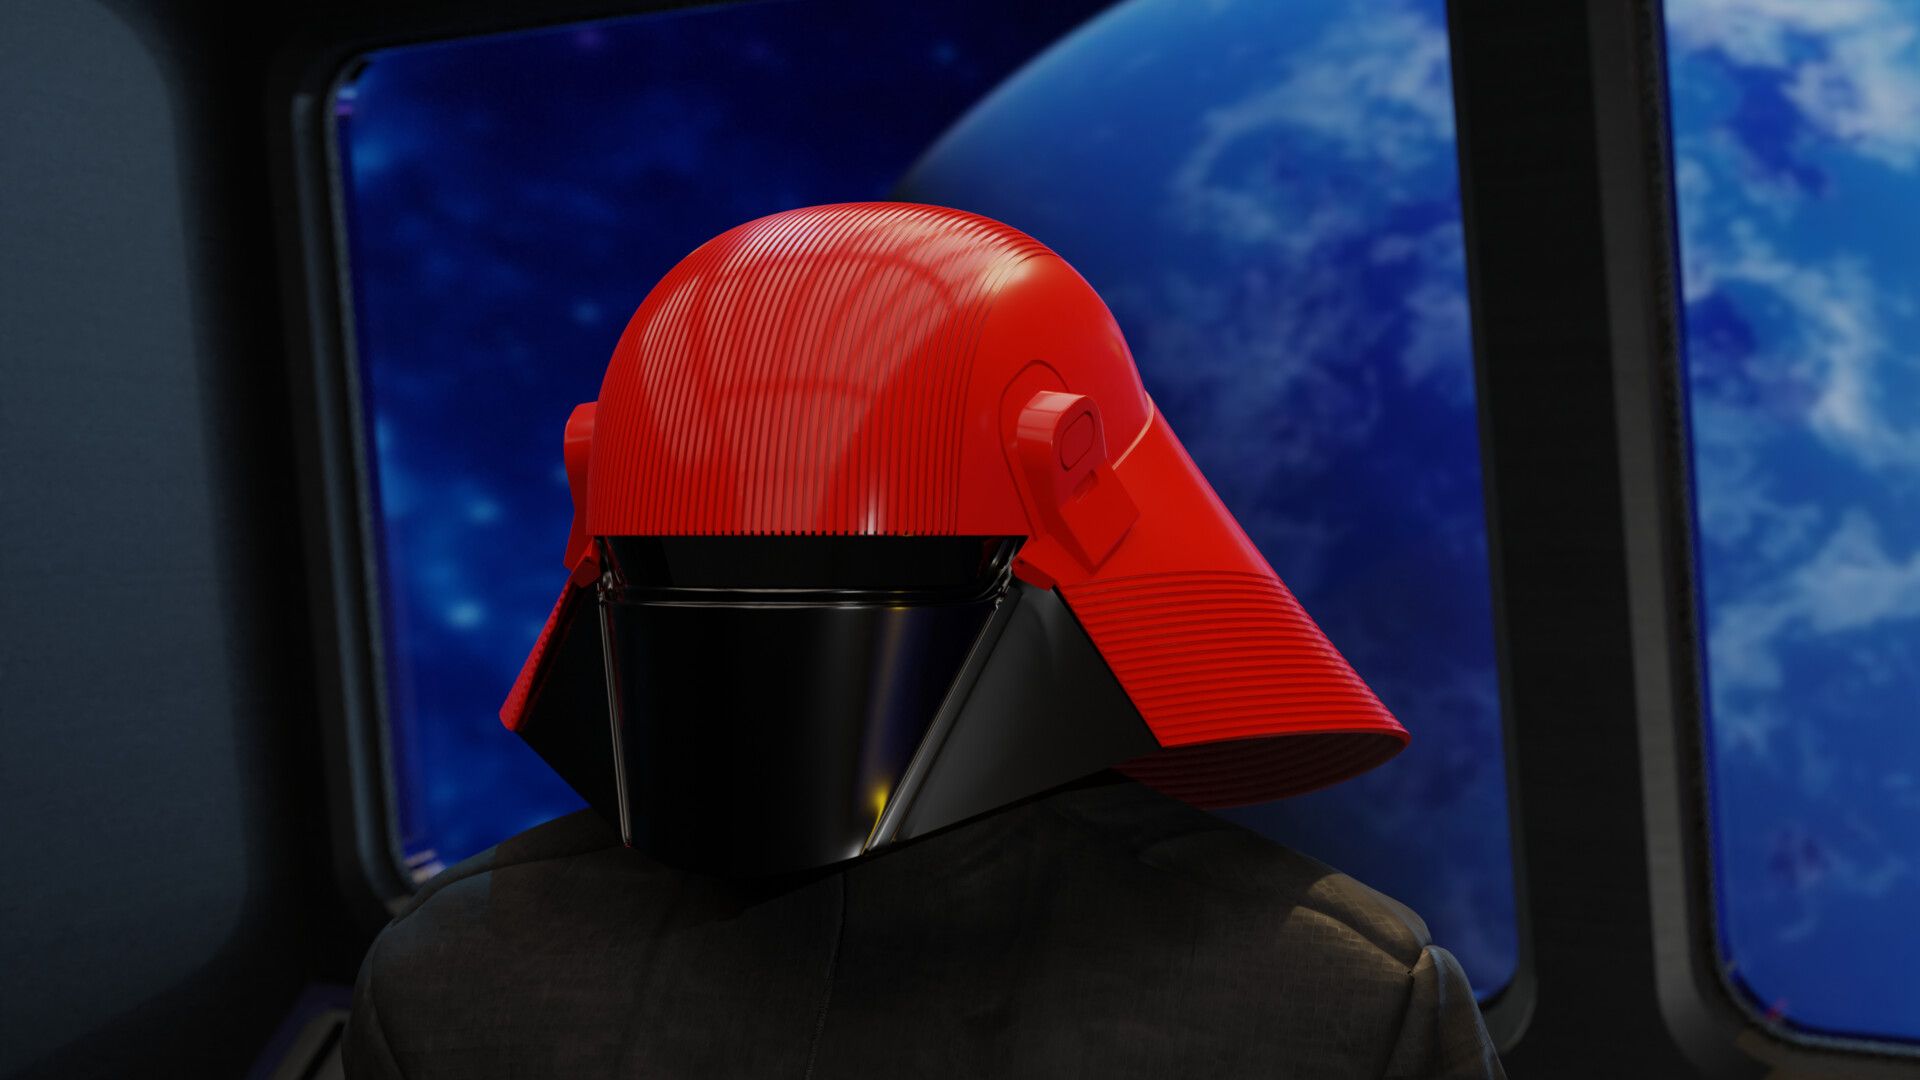 Sith Fleet Technician from Star Wars, Necrosster